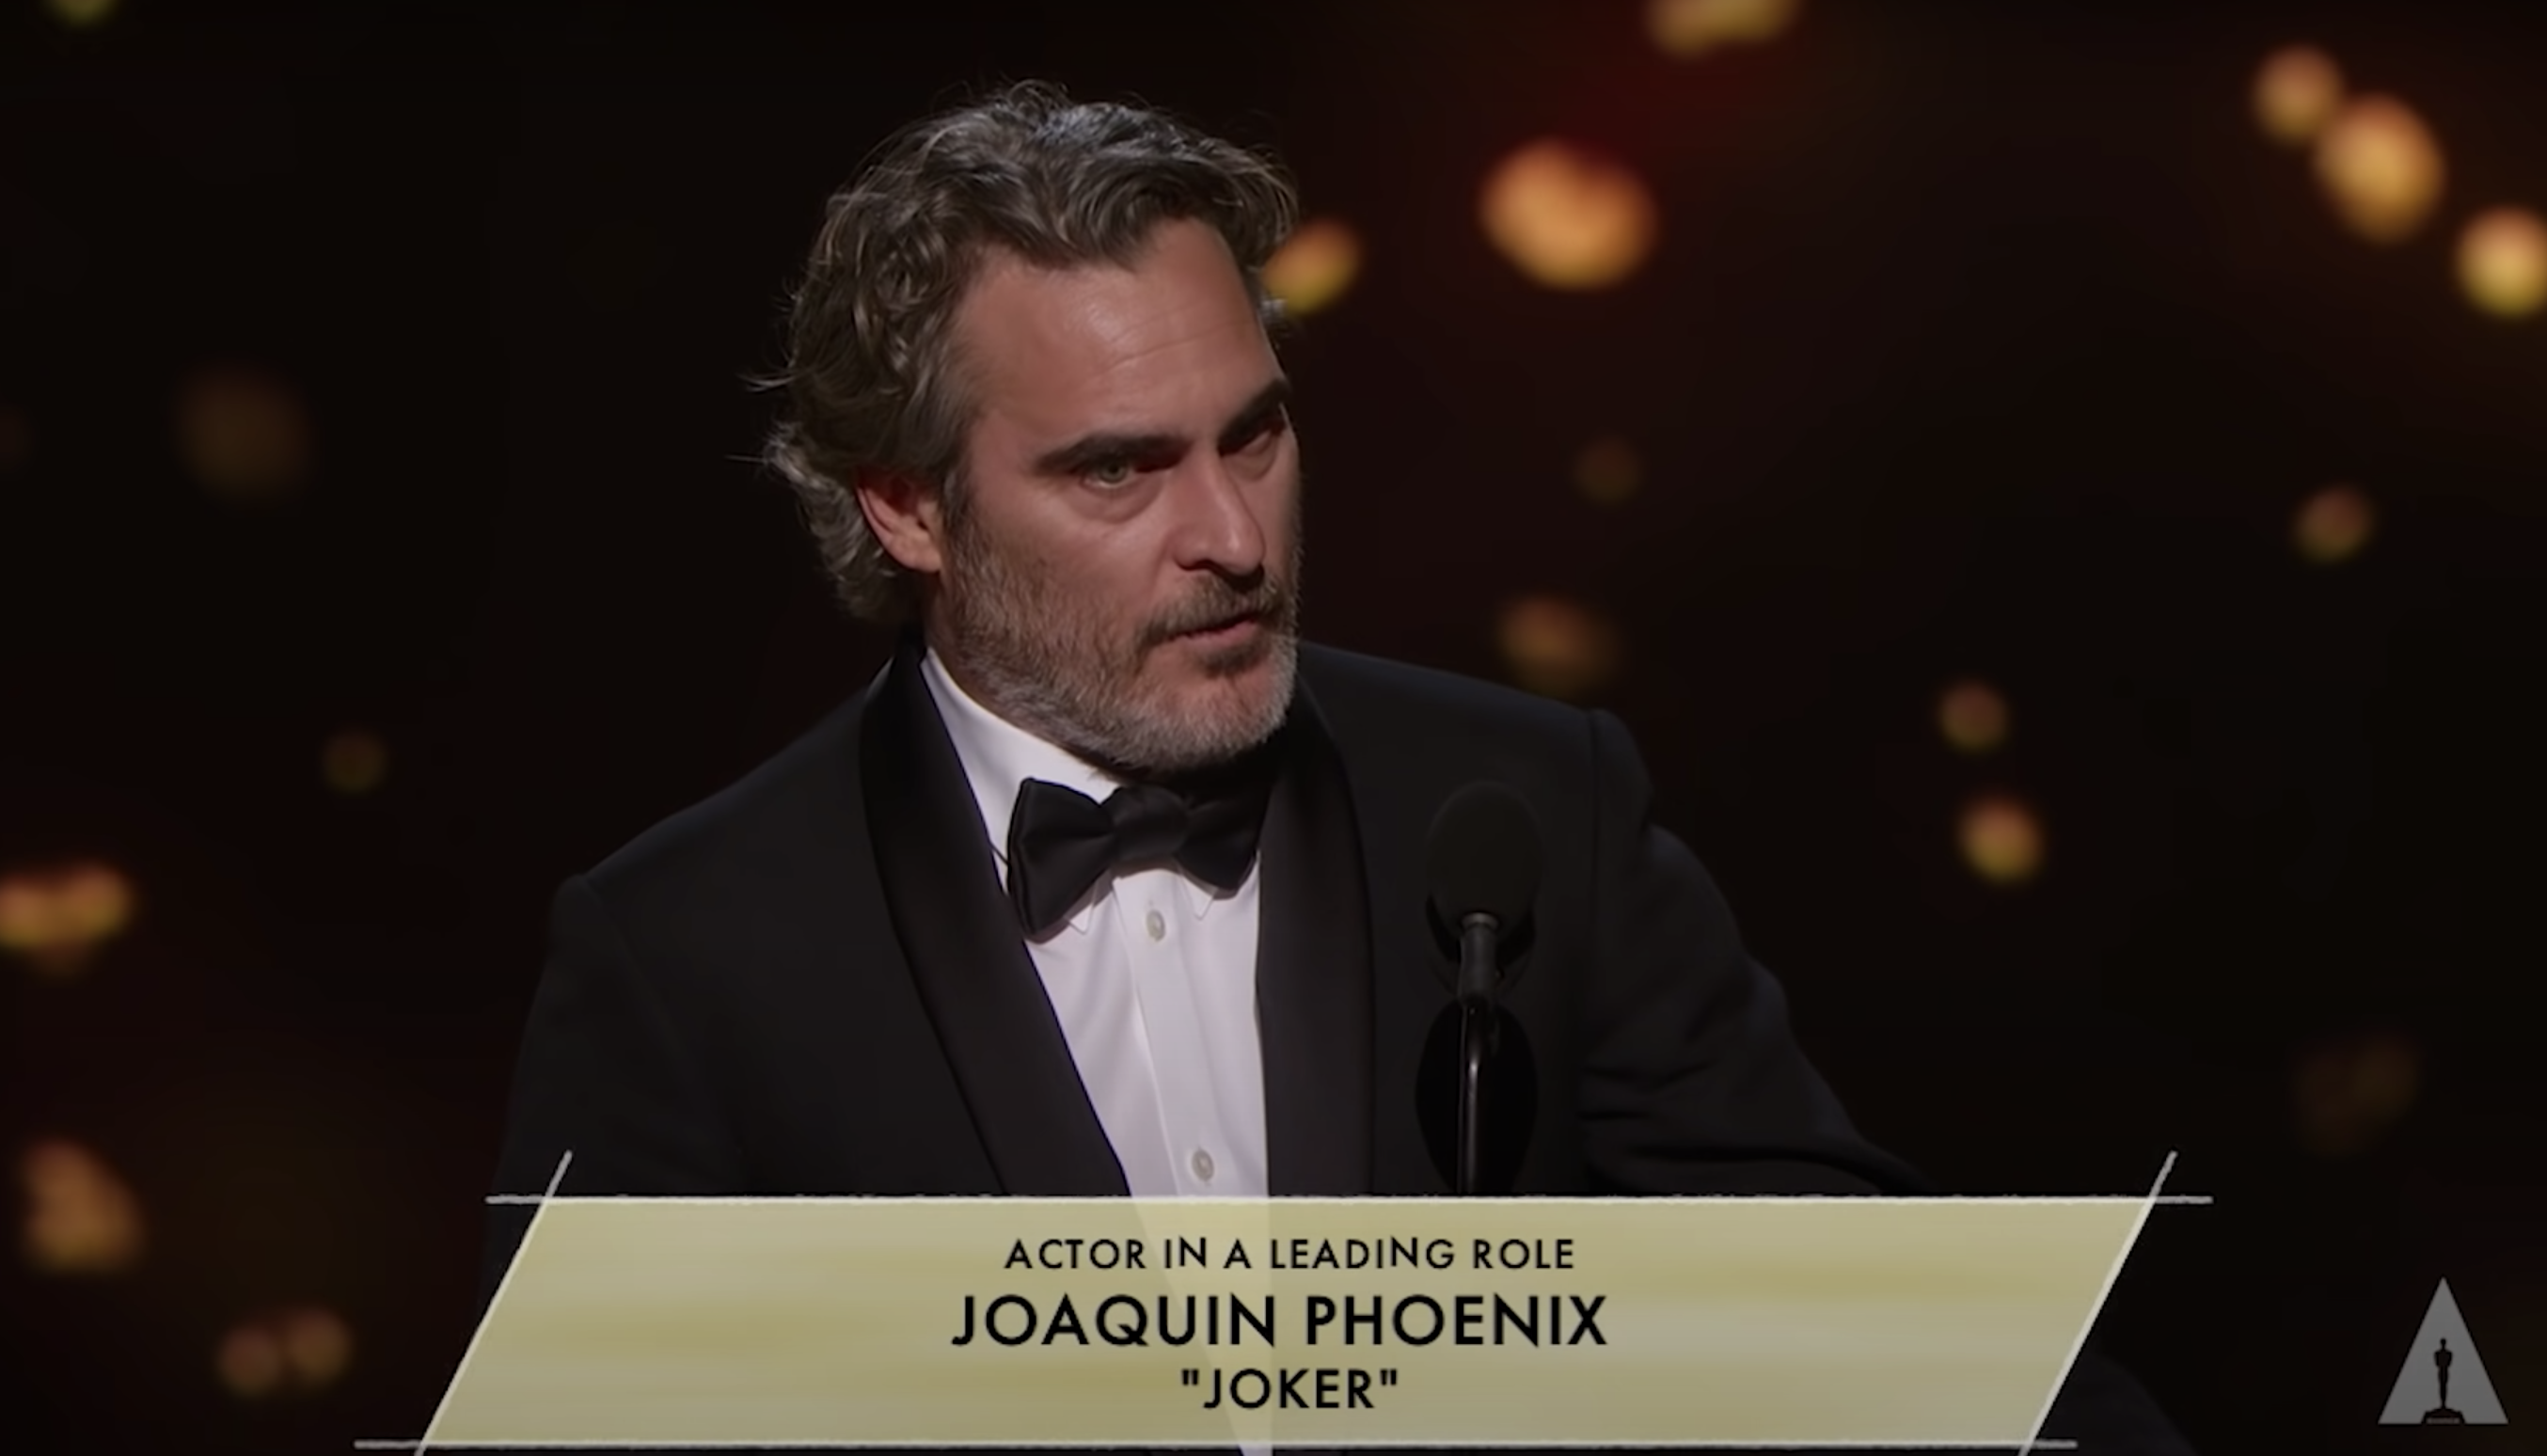 Joaquin accepting the Oscar